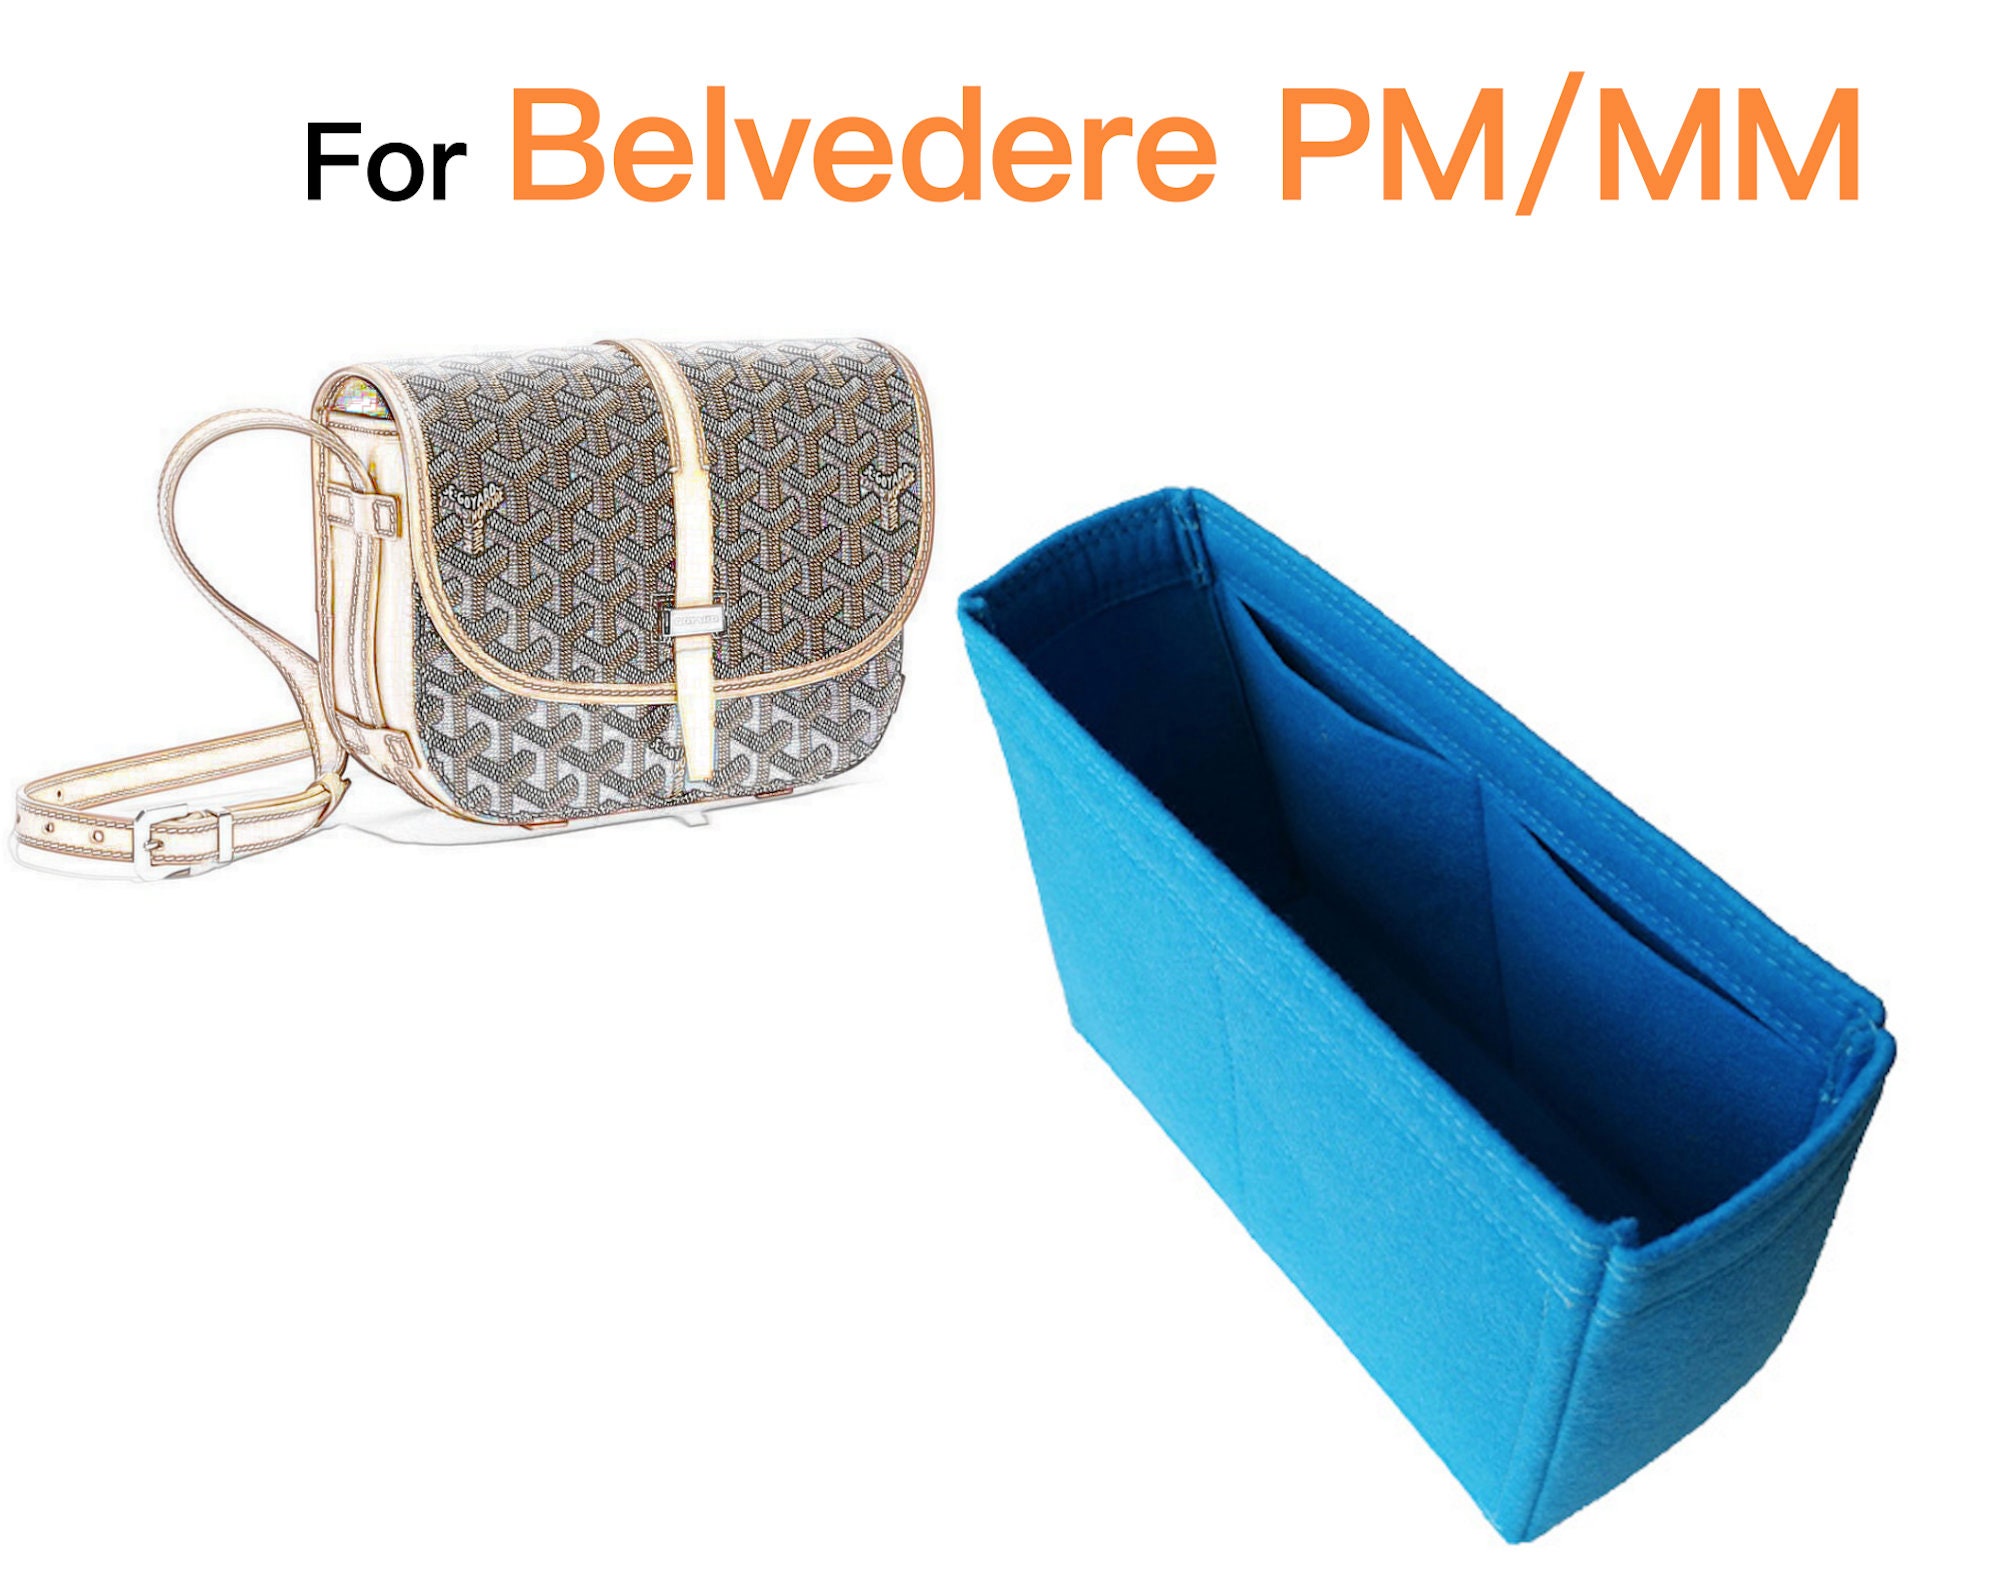 Belvedere Bag Organizer / Belvedere Insert With Zipper / 